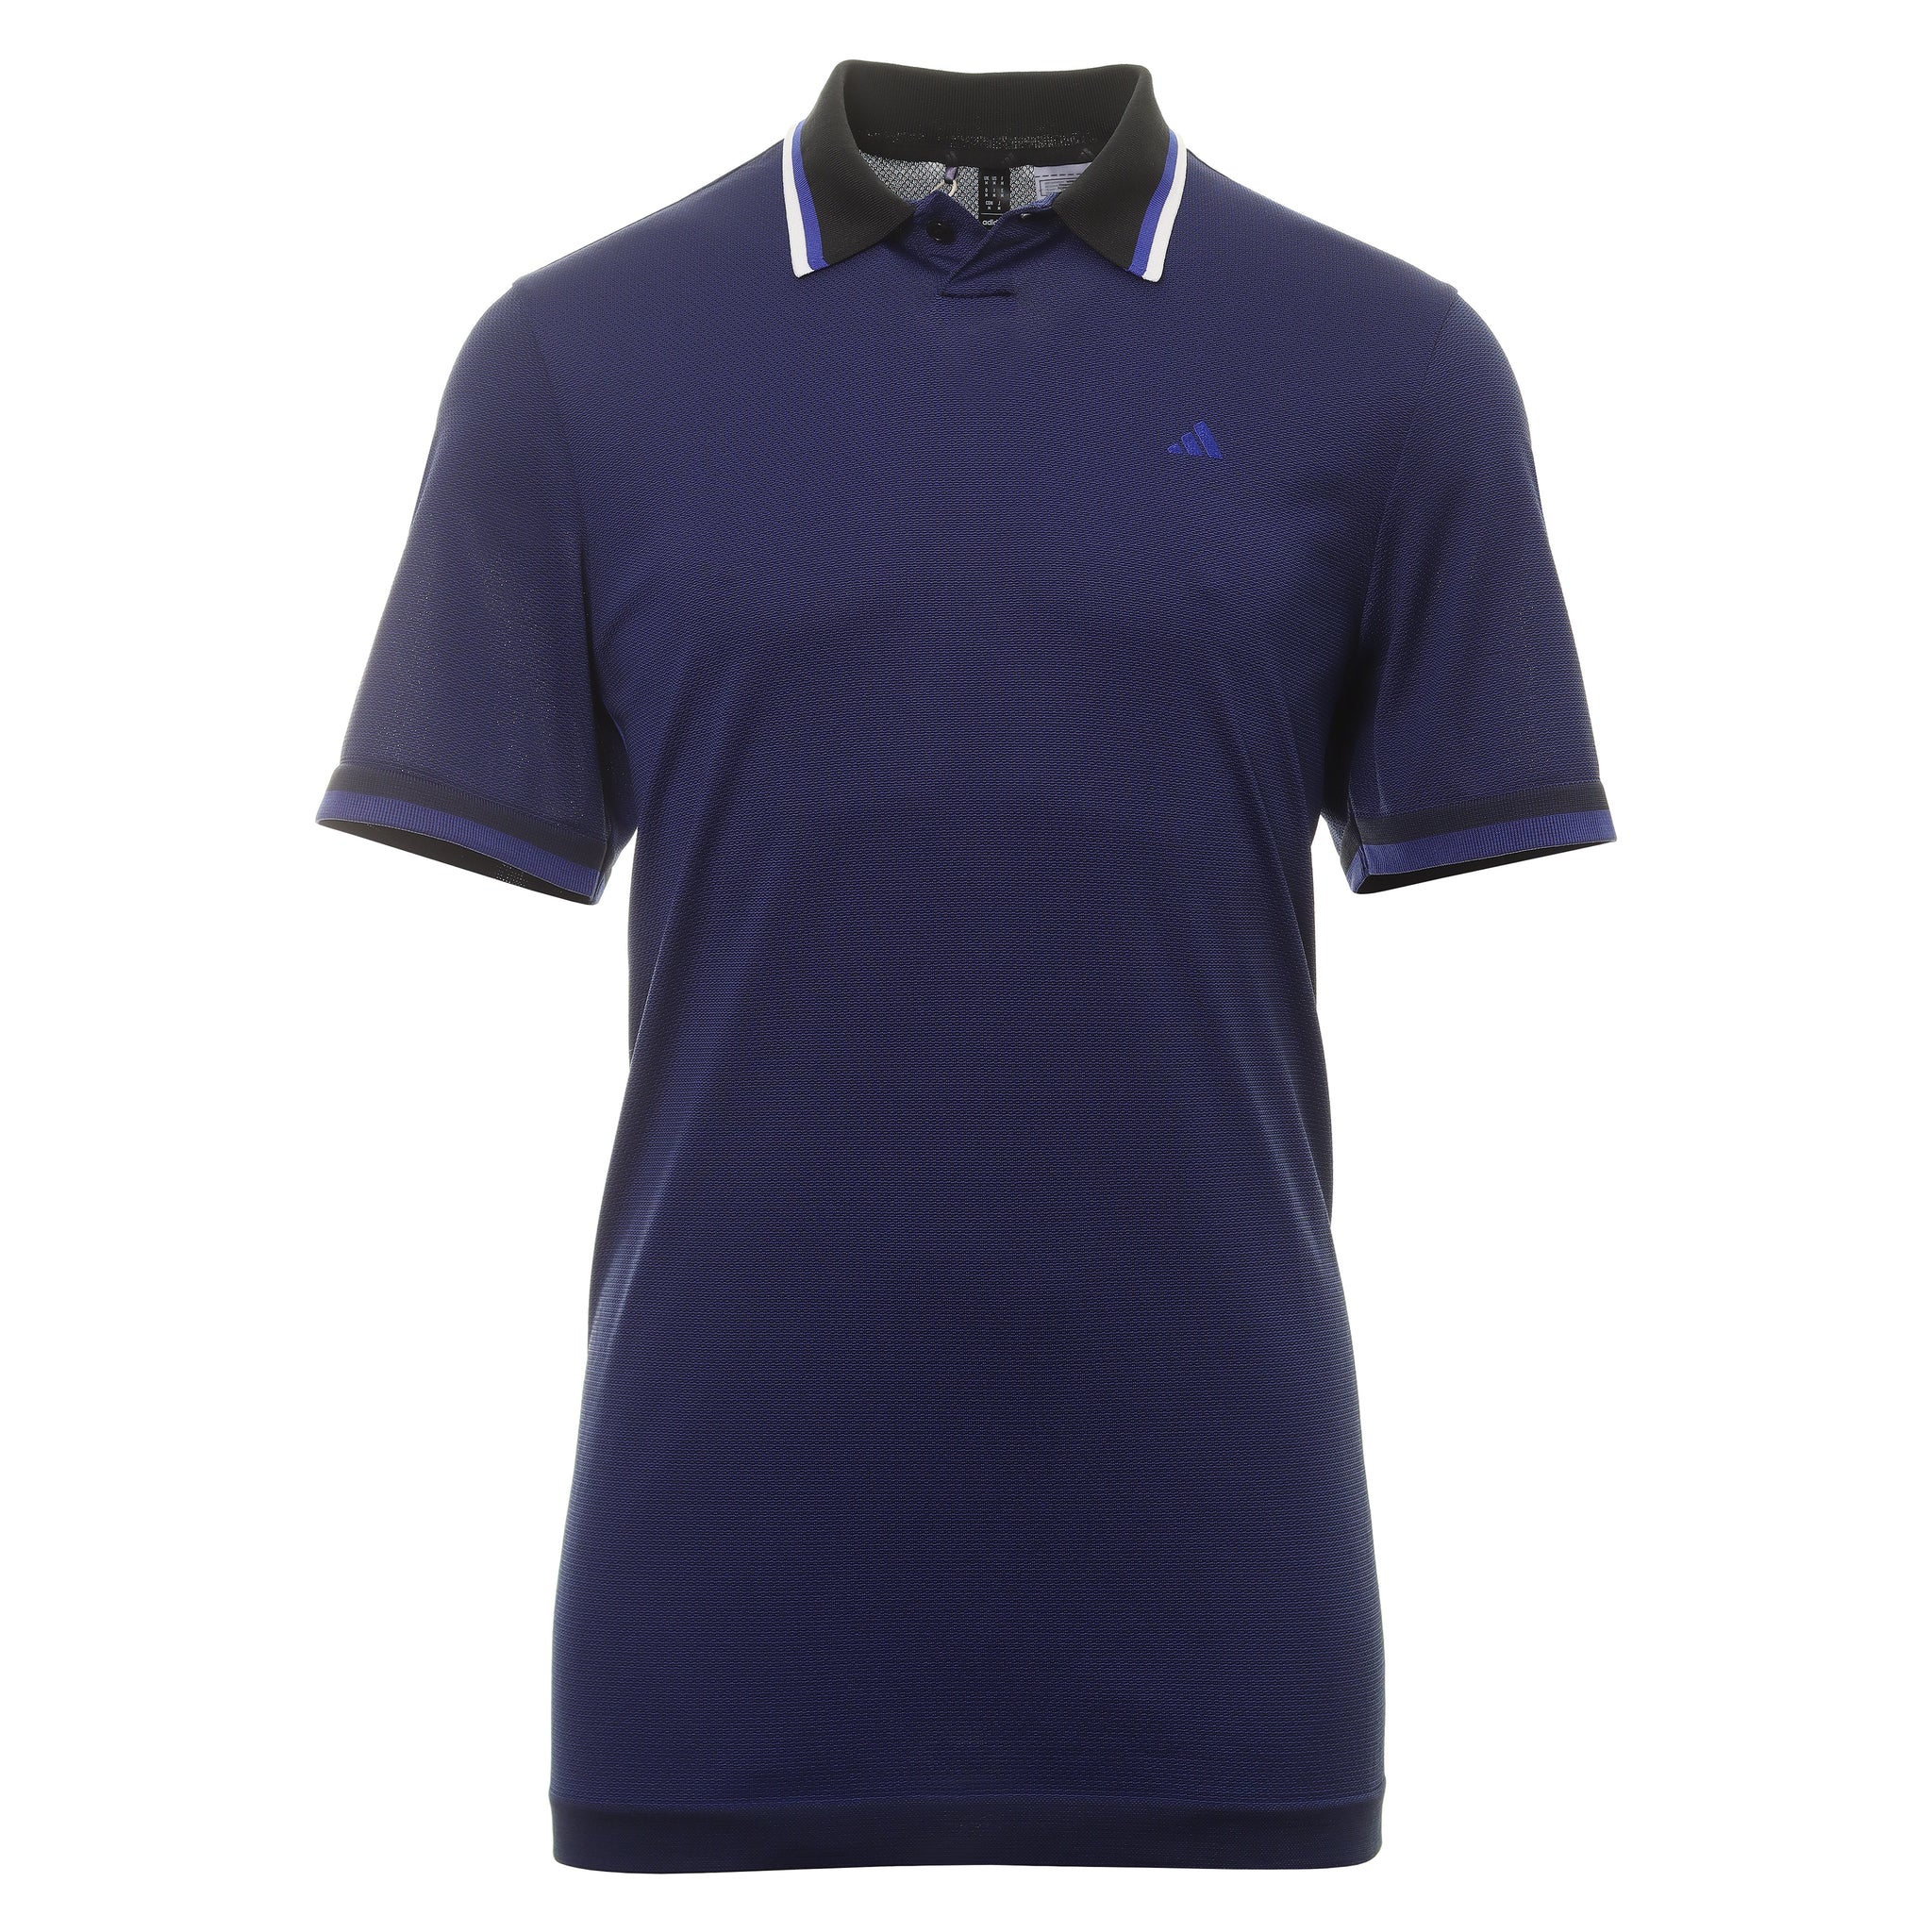 adidas Golf Primeknit Shirt